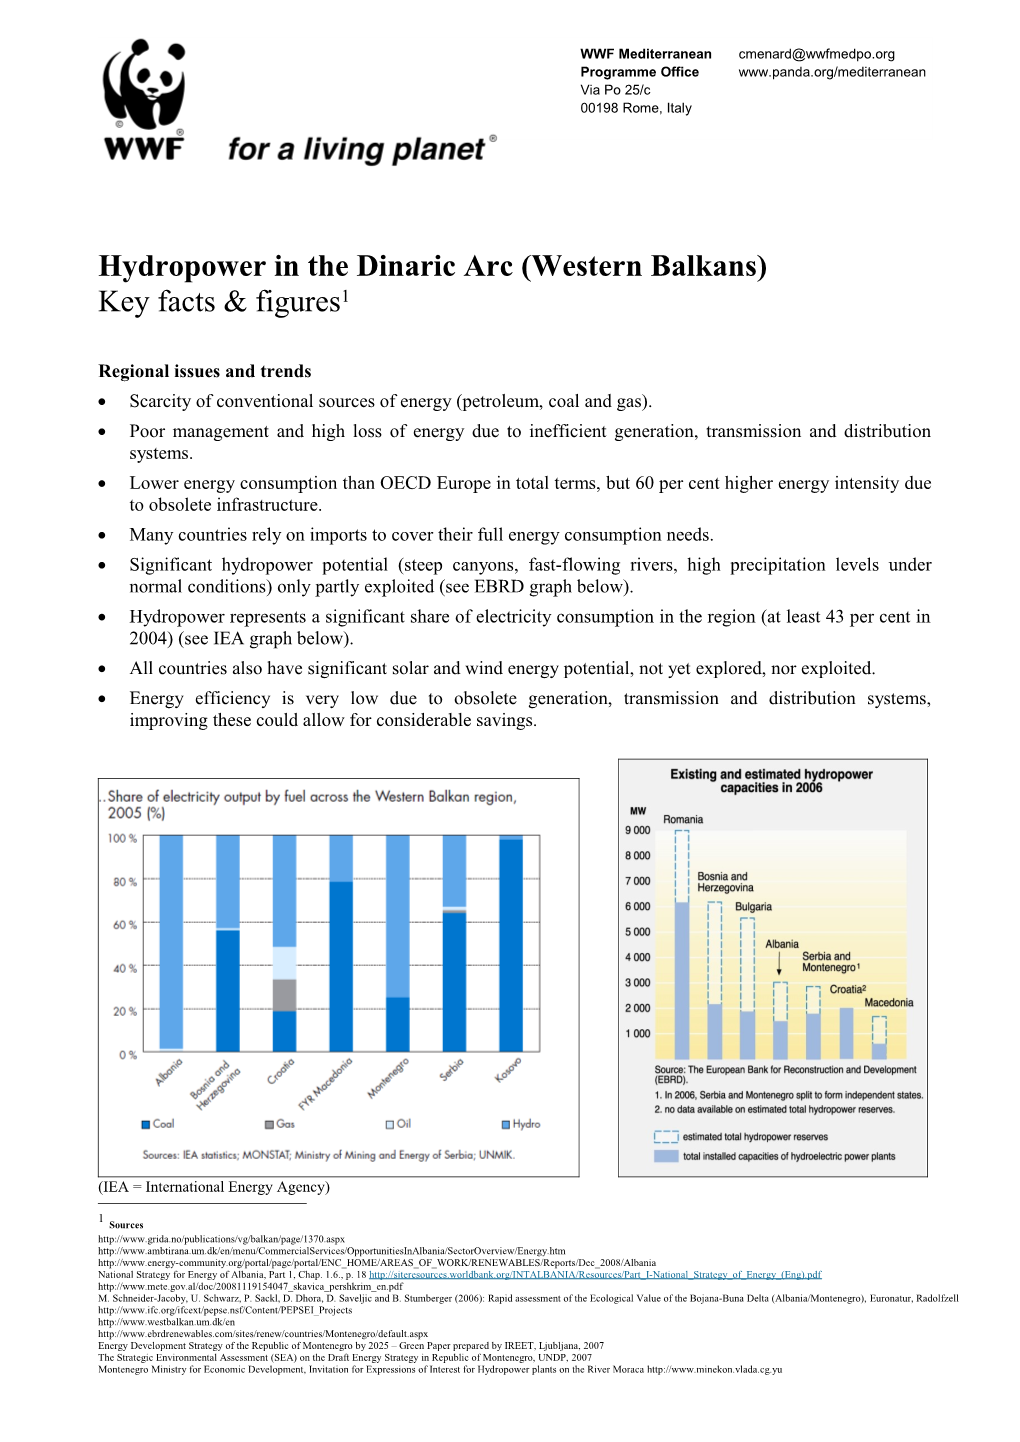 Hydropower in the Dinaric Arc (Western Balkans)